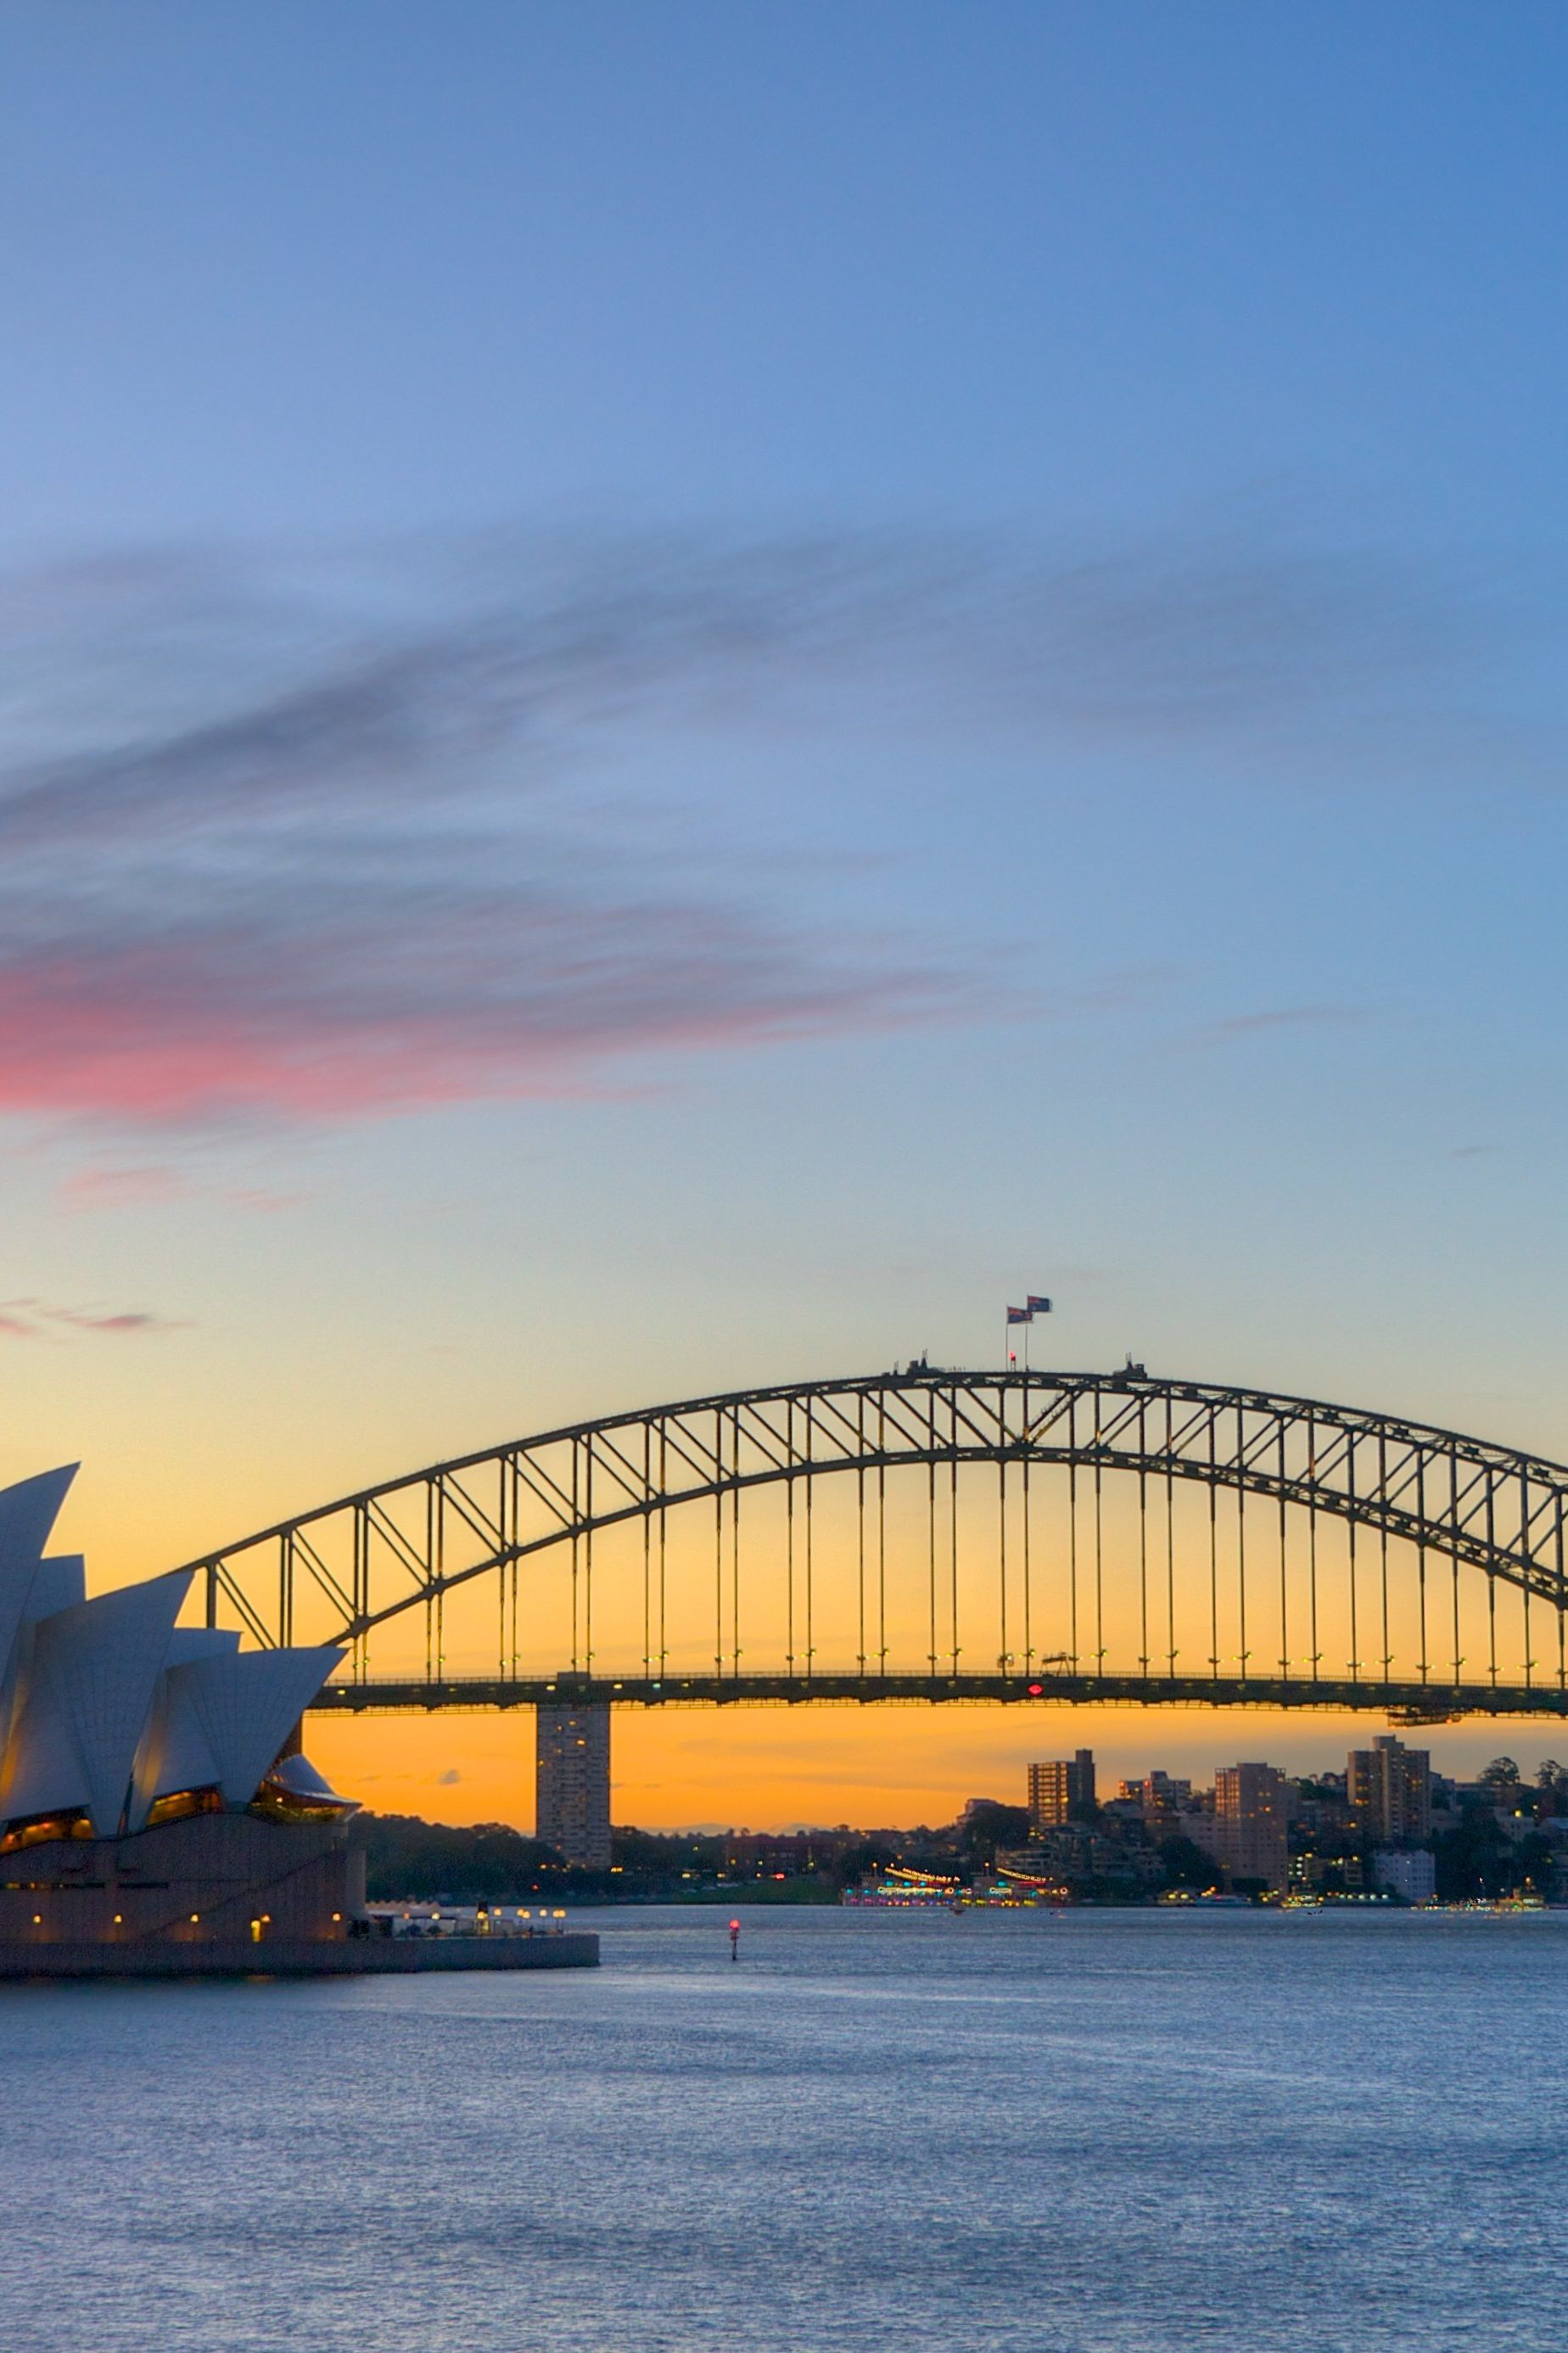 Sydney, Australia: 50 reasons why it is the world's greatest city | CNN